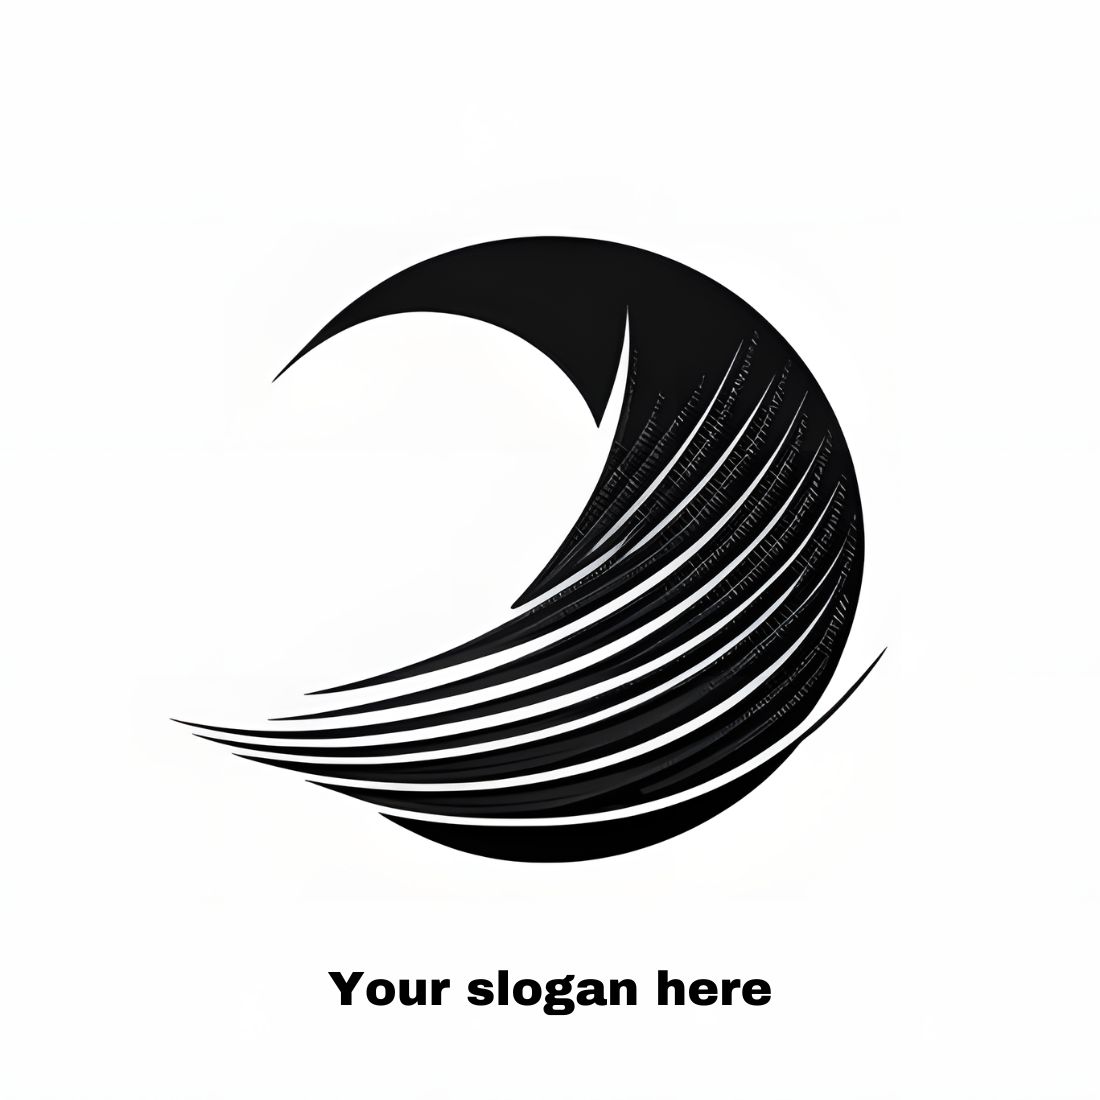 Monochrome Logo cover image.